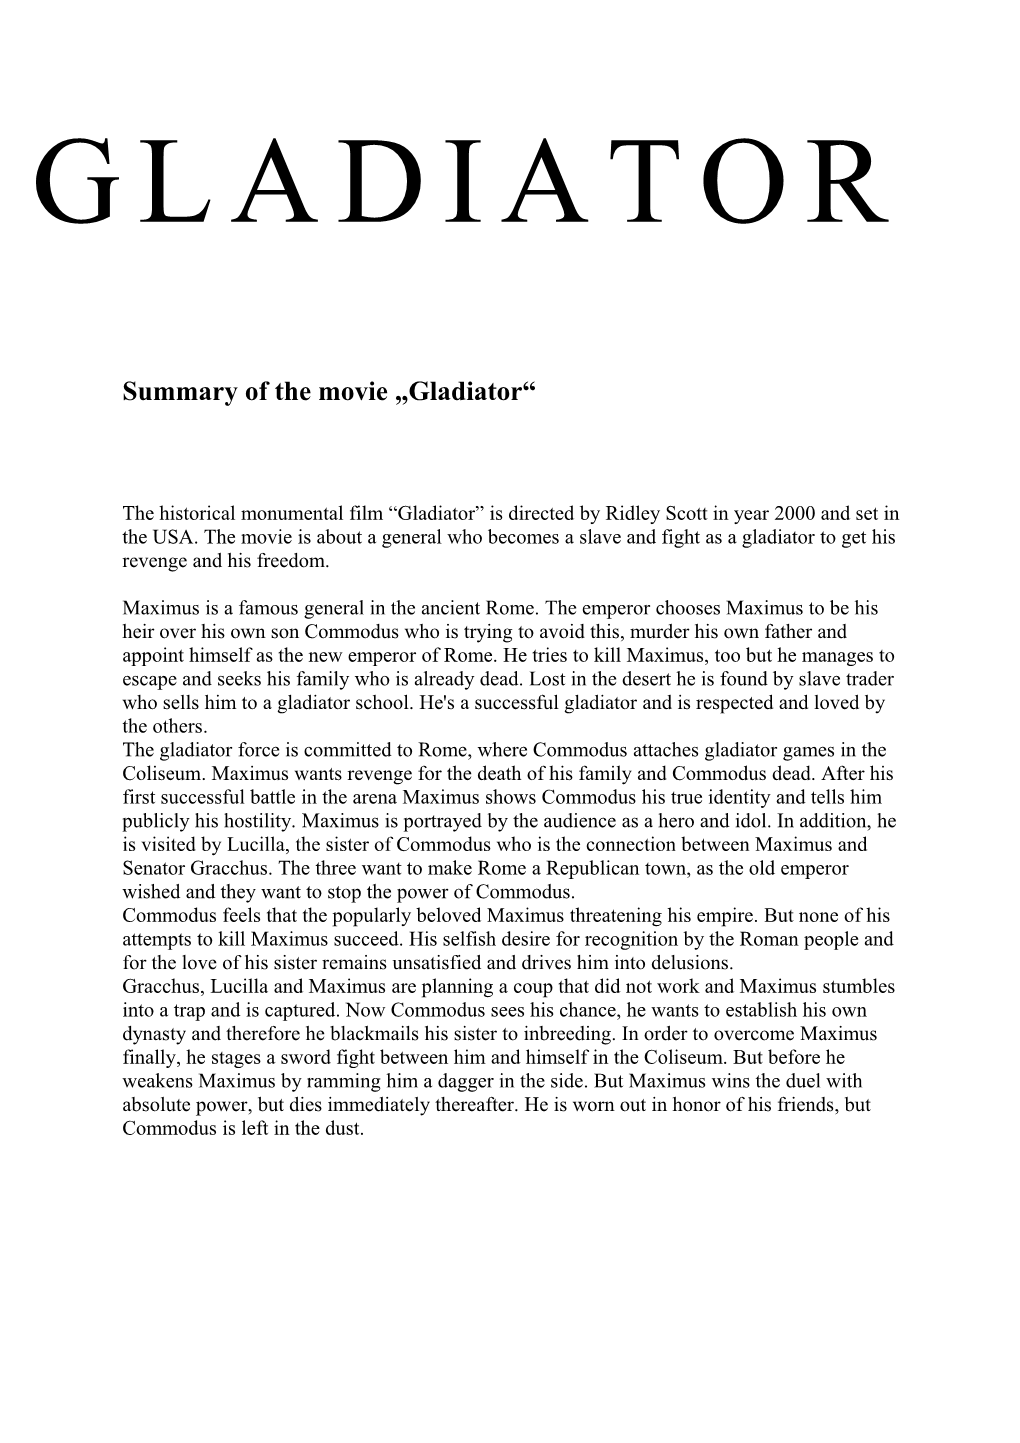 Summary of the Movie Gladiator